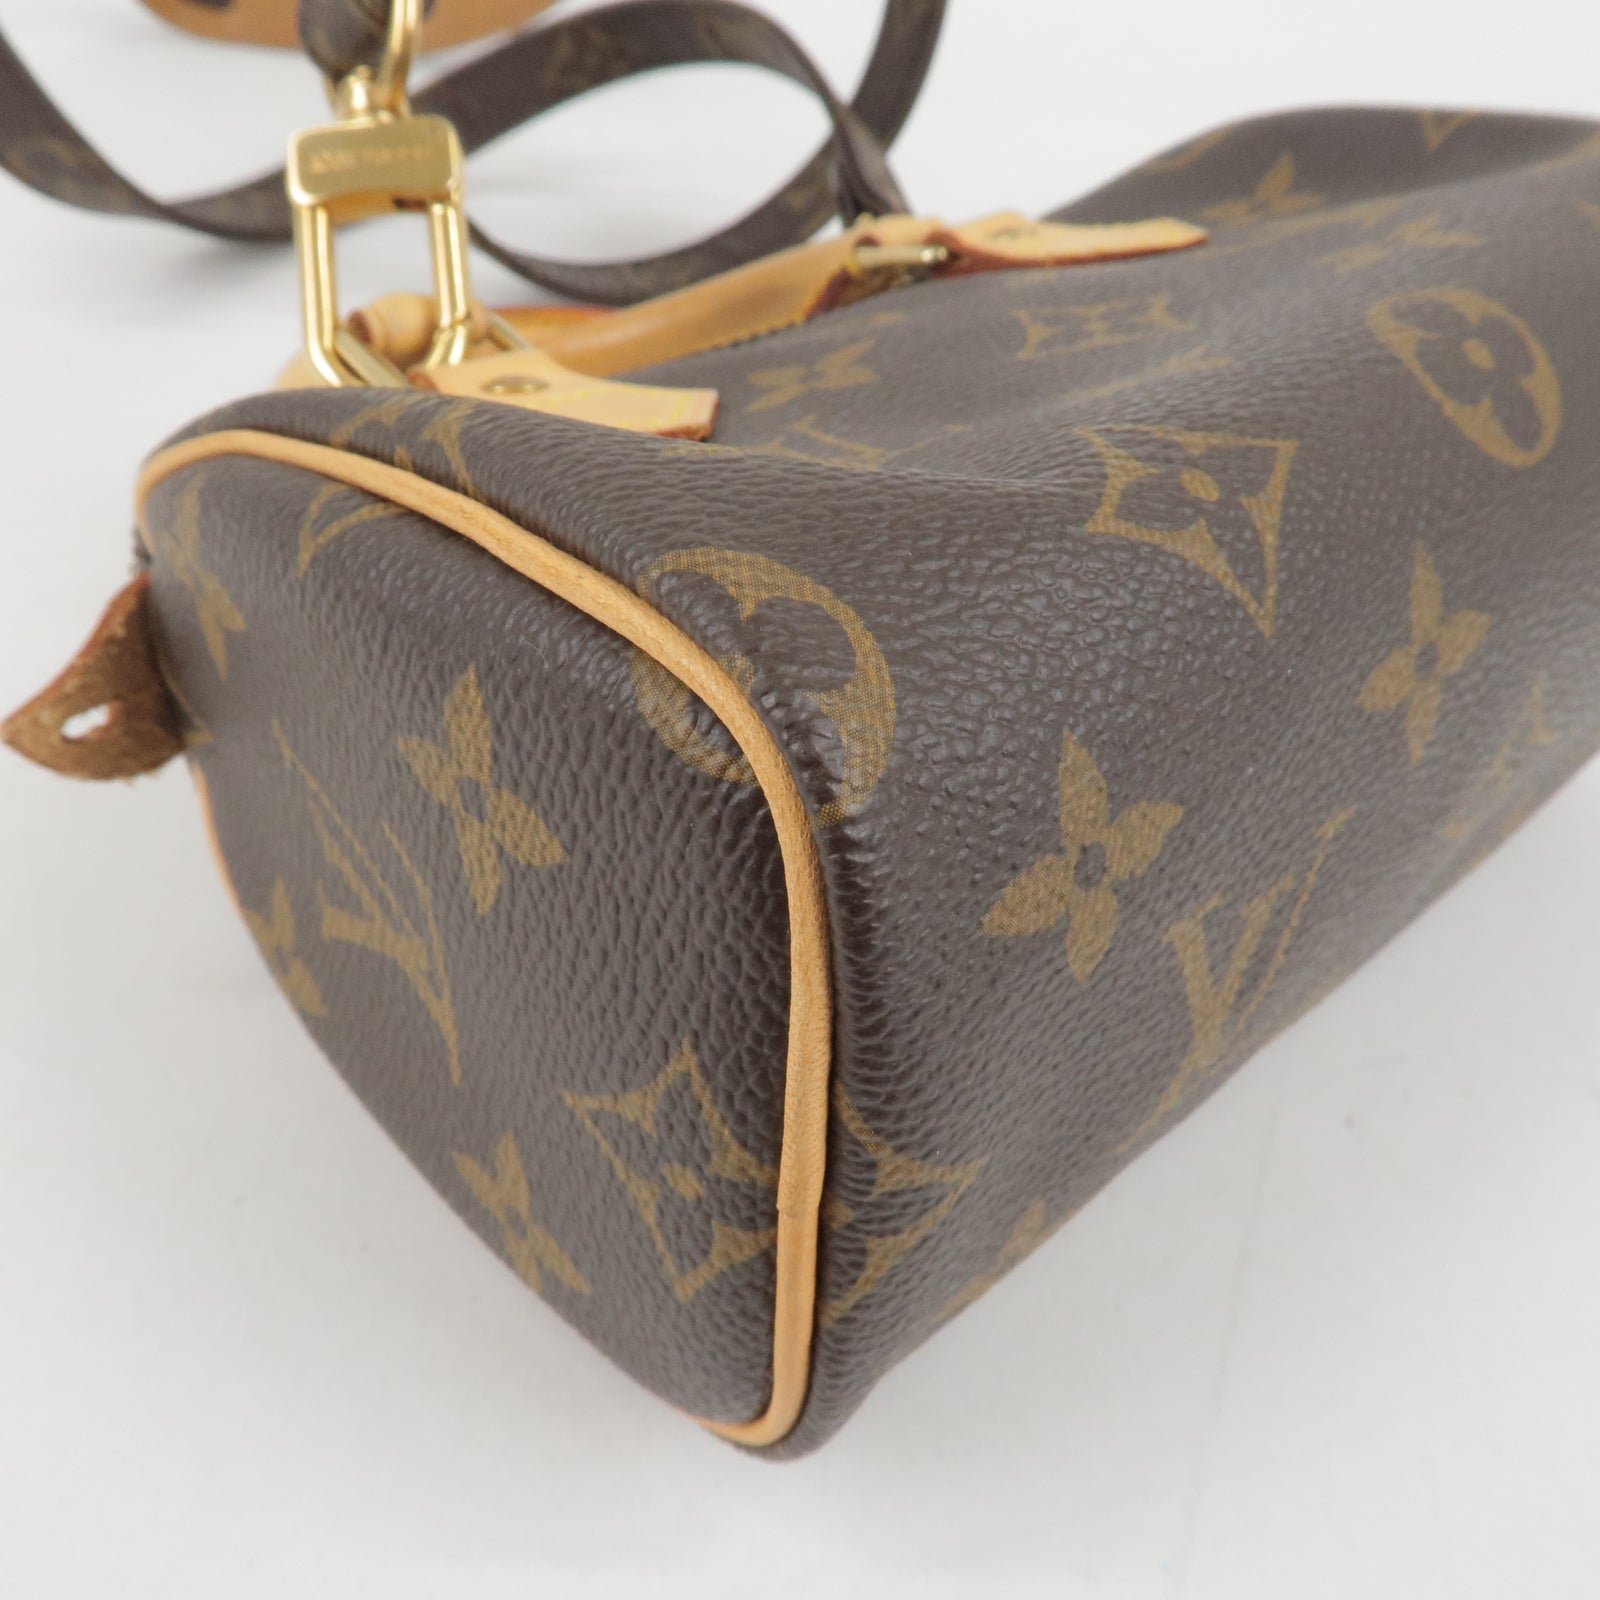 Louis Vuitton 2008 Pre-owned Mini Speedy Bag